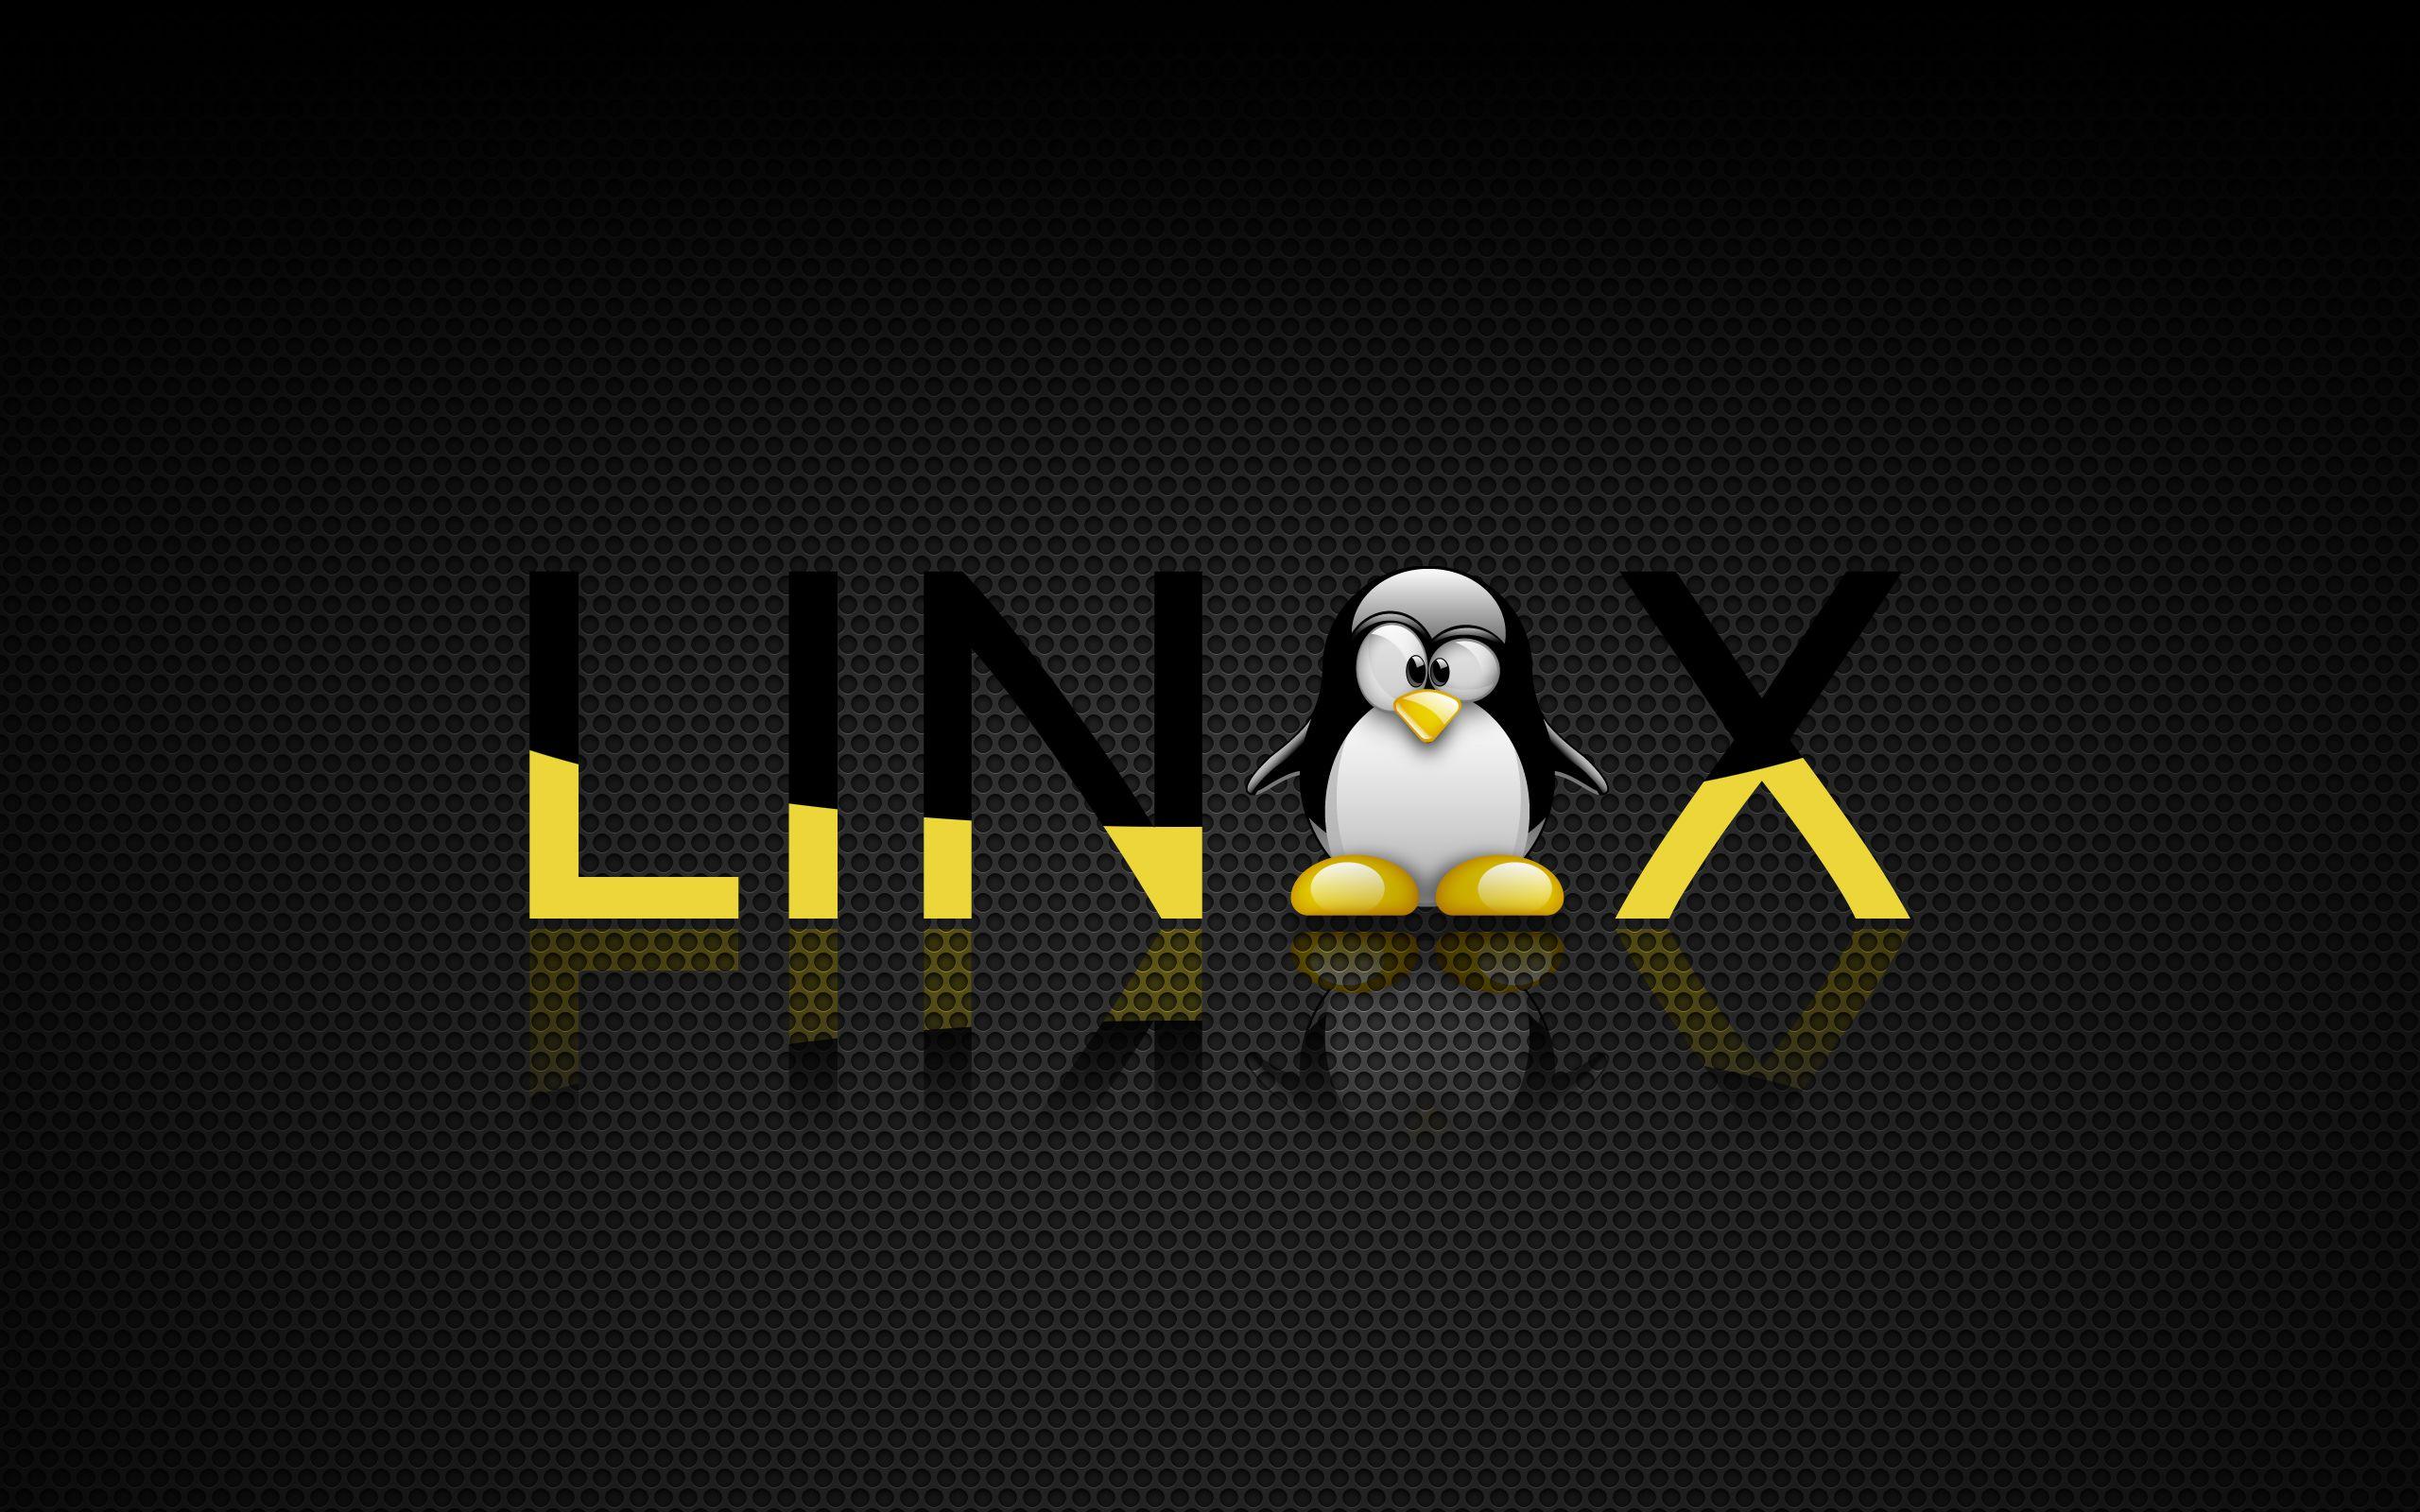 Balena linux. Линукс. Заставка Linux. Обои на рабочий стол Linux. Пингвин линукс.